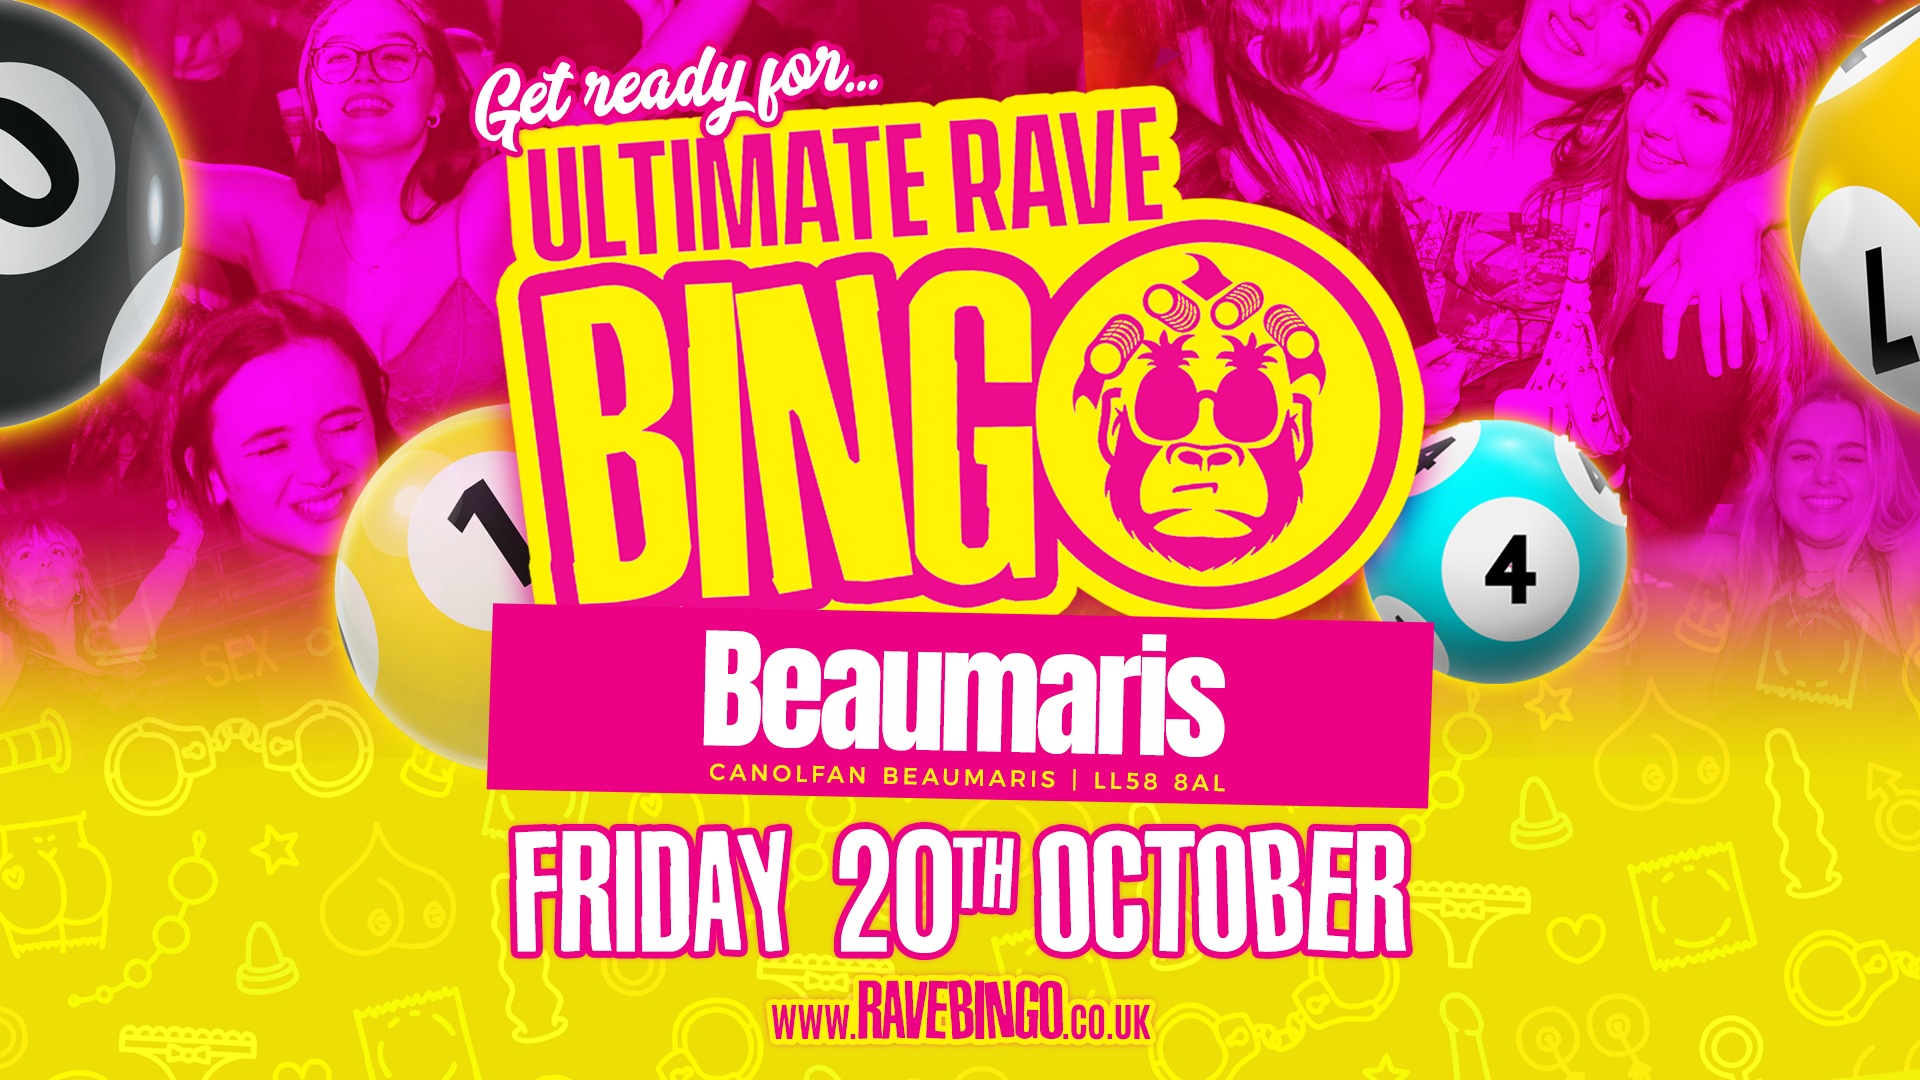 Ultimate Rave Bingo // Beaumaris // Friday 20th October